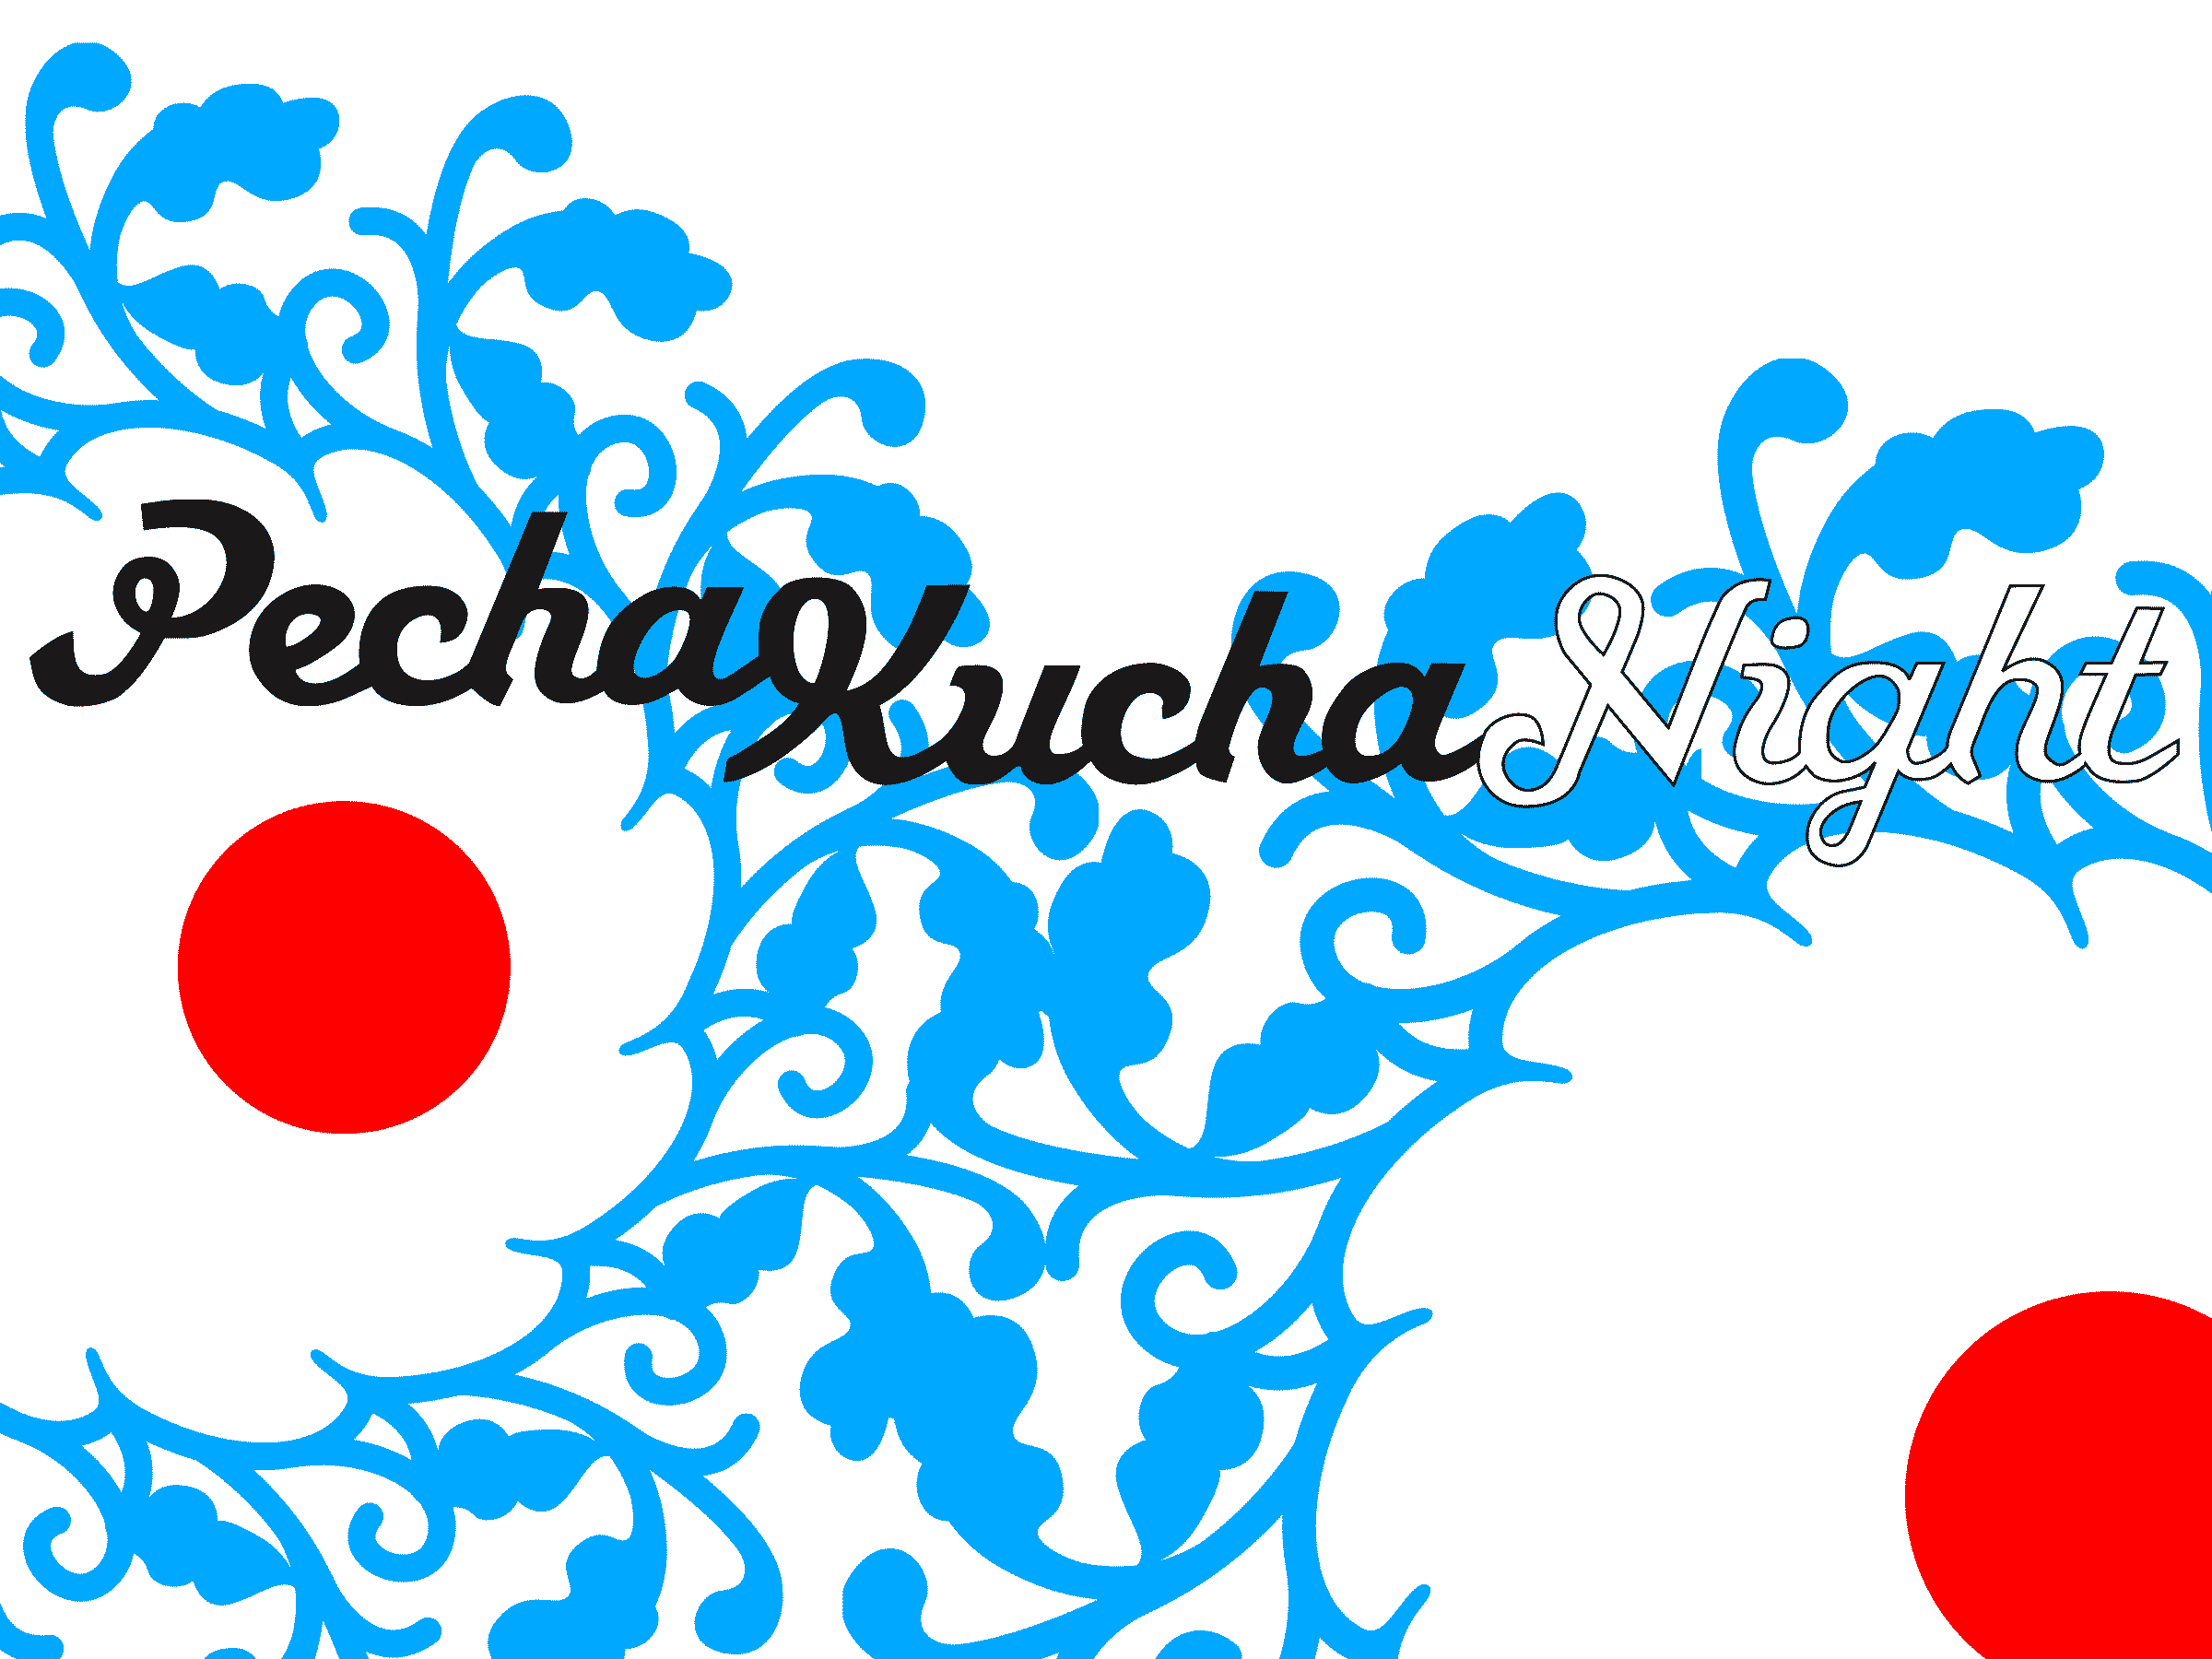 pecha-kucha nights norwich